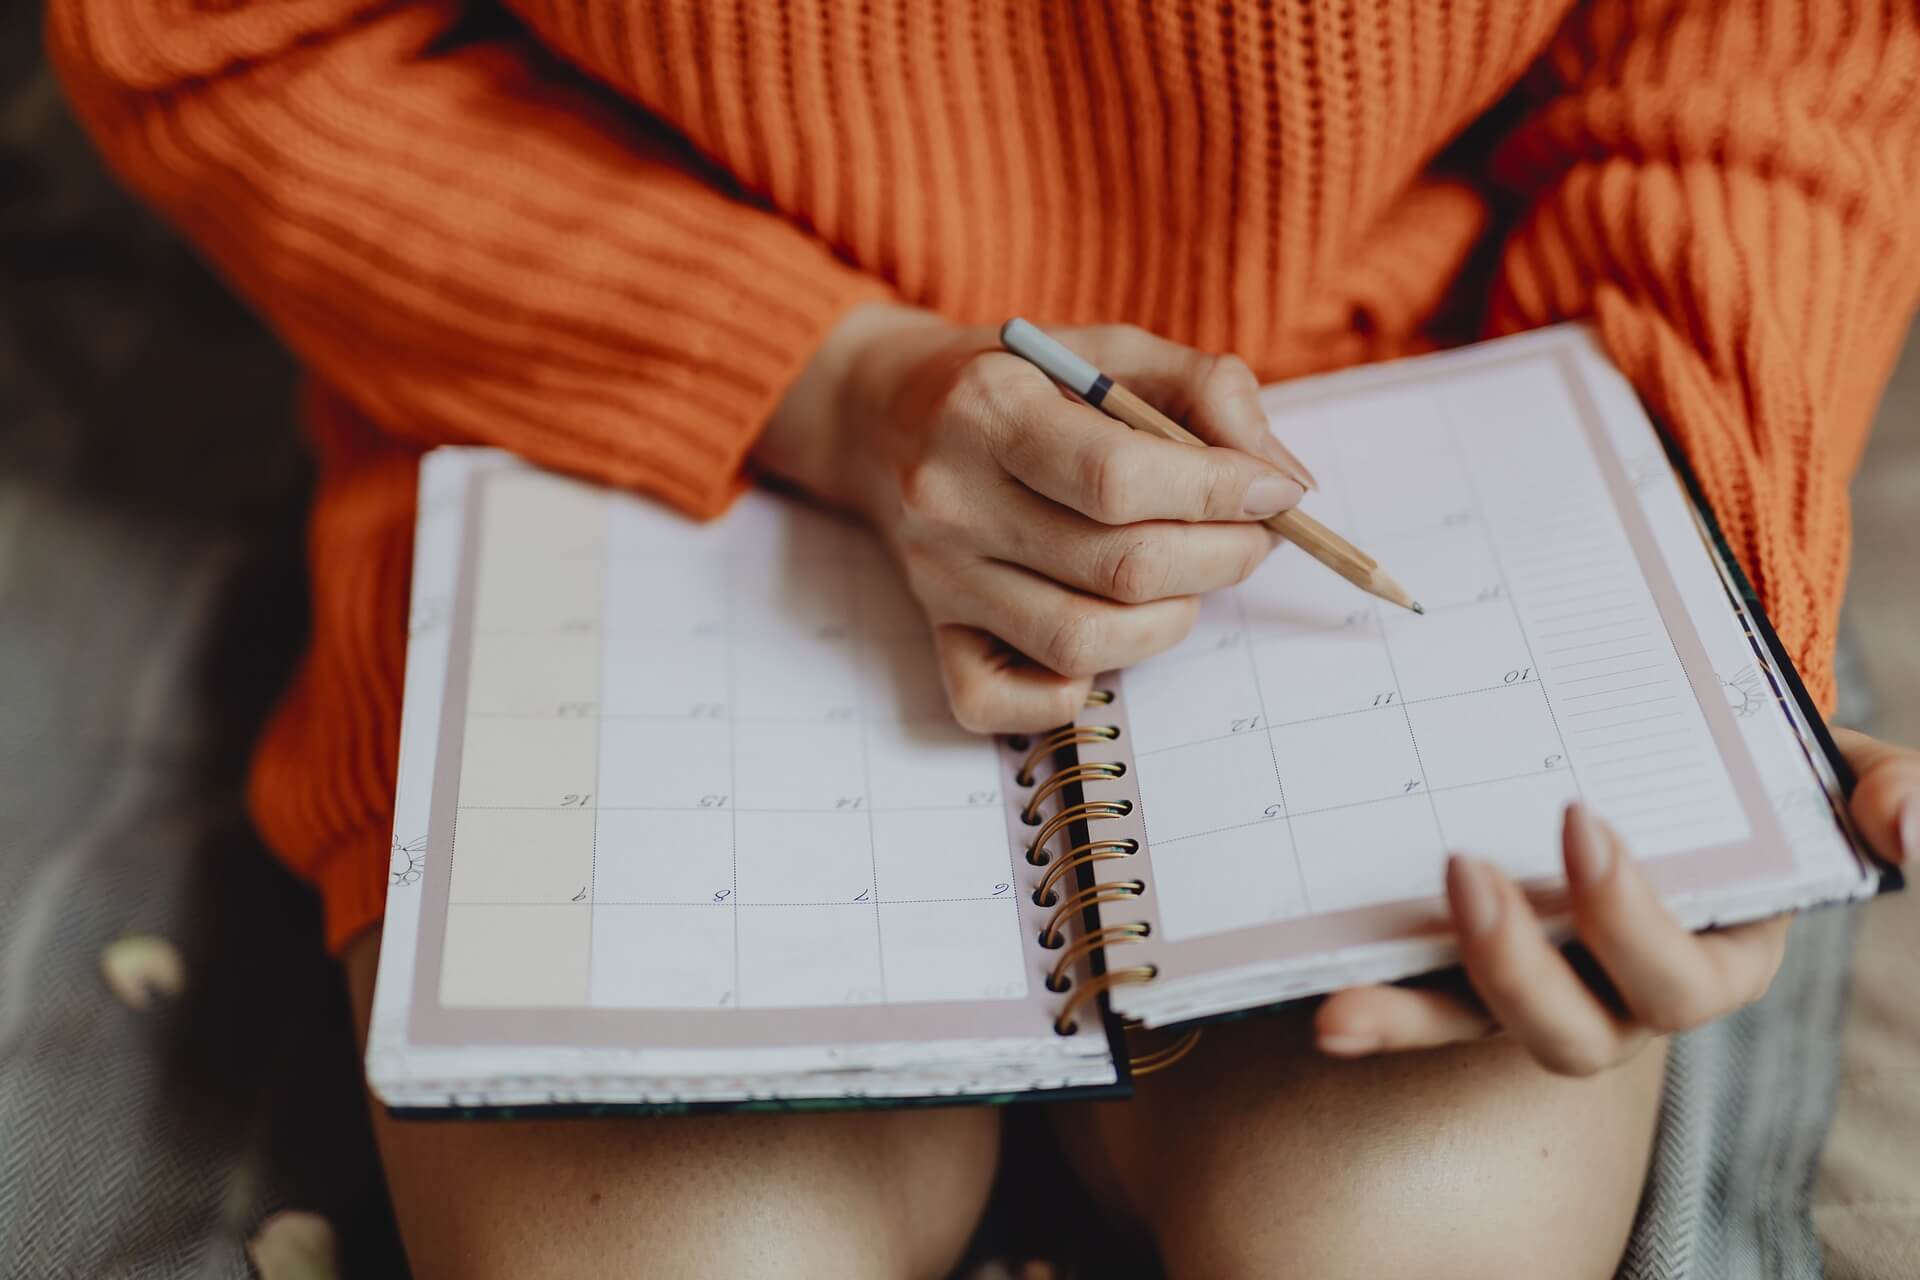 Woman writing on a calendar